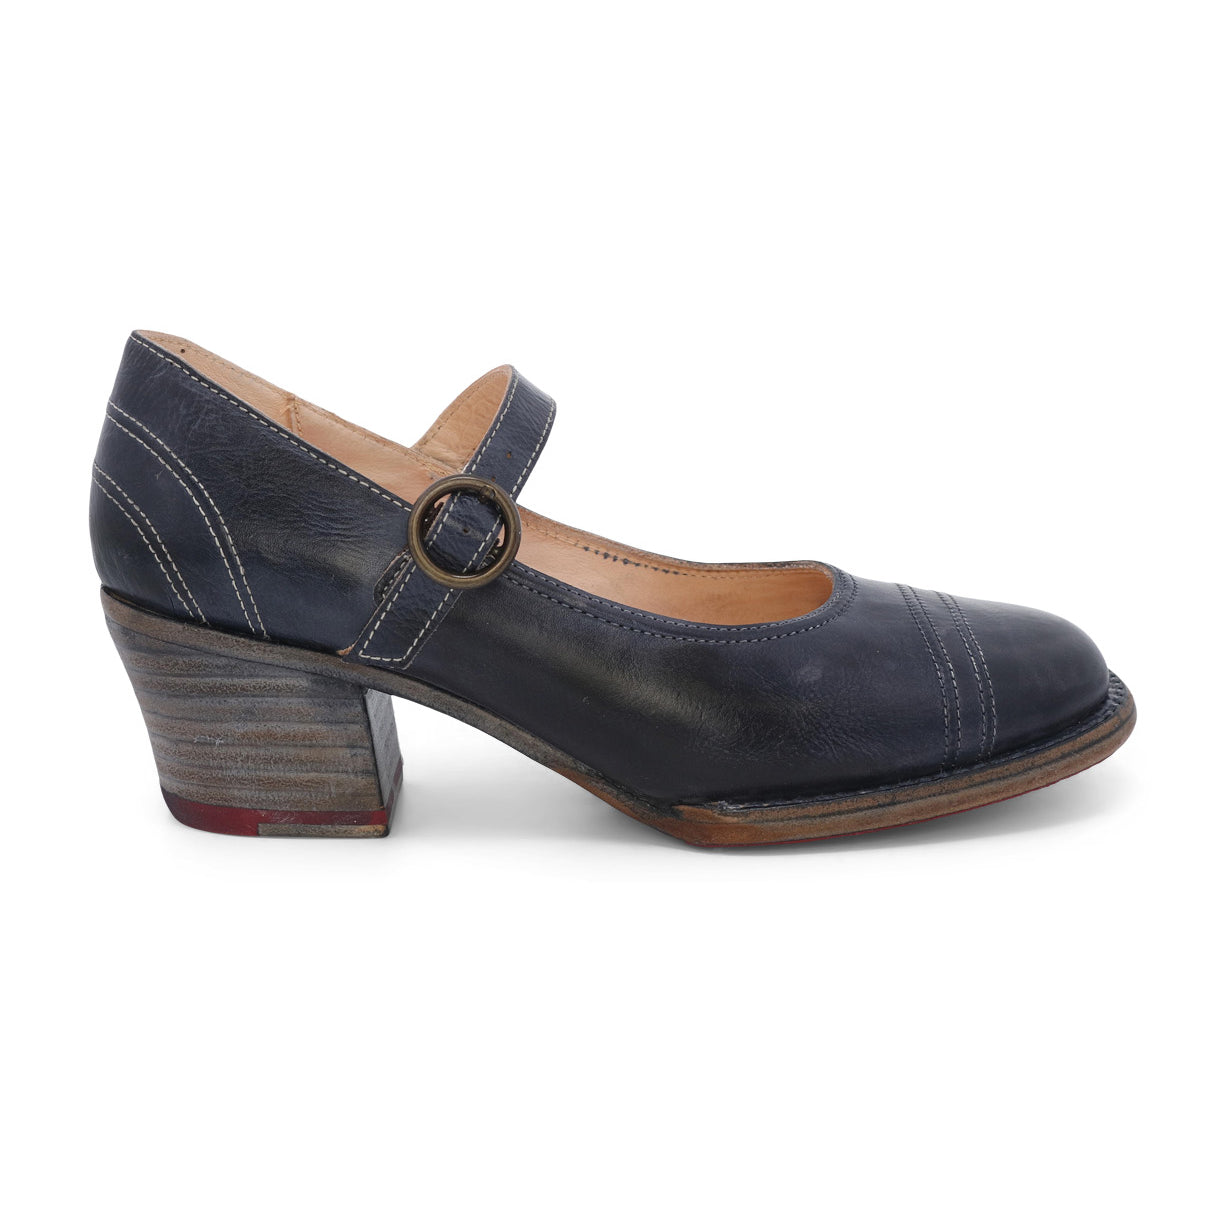 A women's blue mary jane shoe with a wooden heel in the Oak Tree Farms Twigley style.